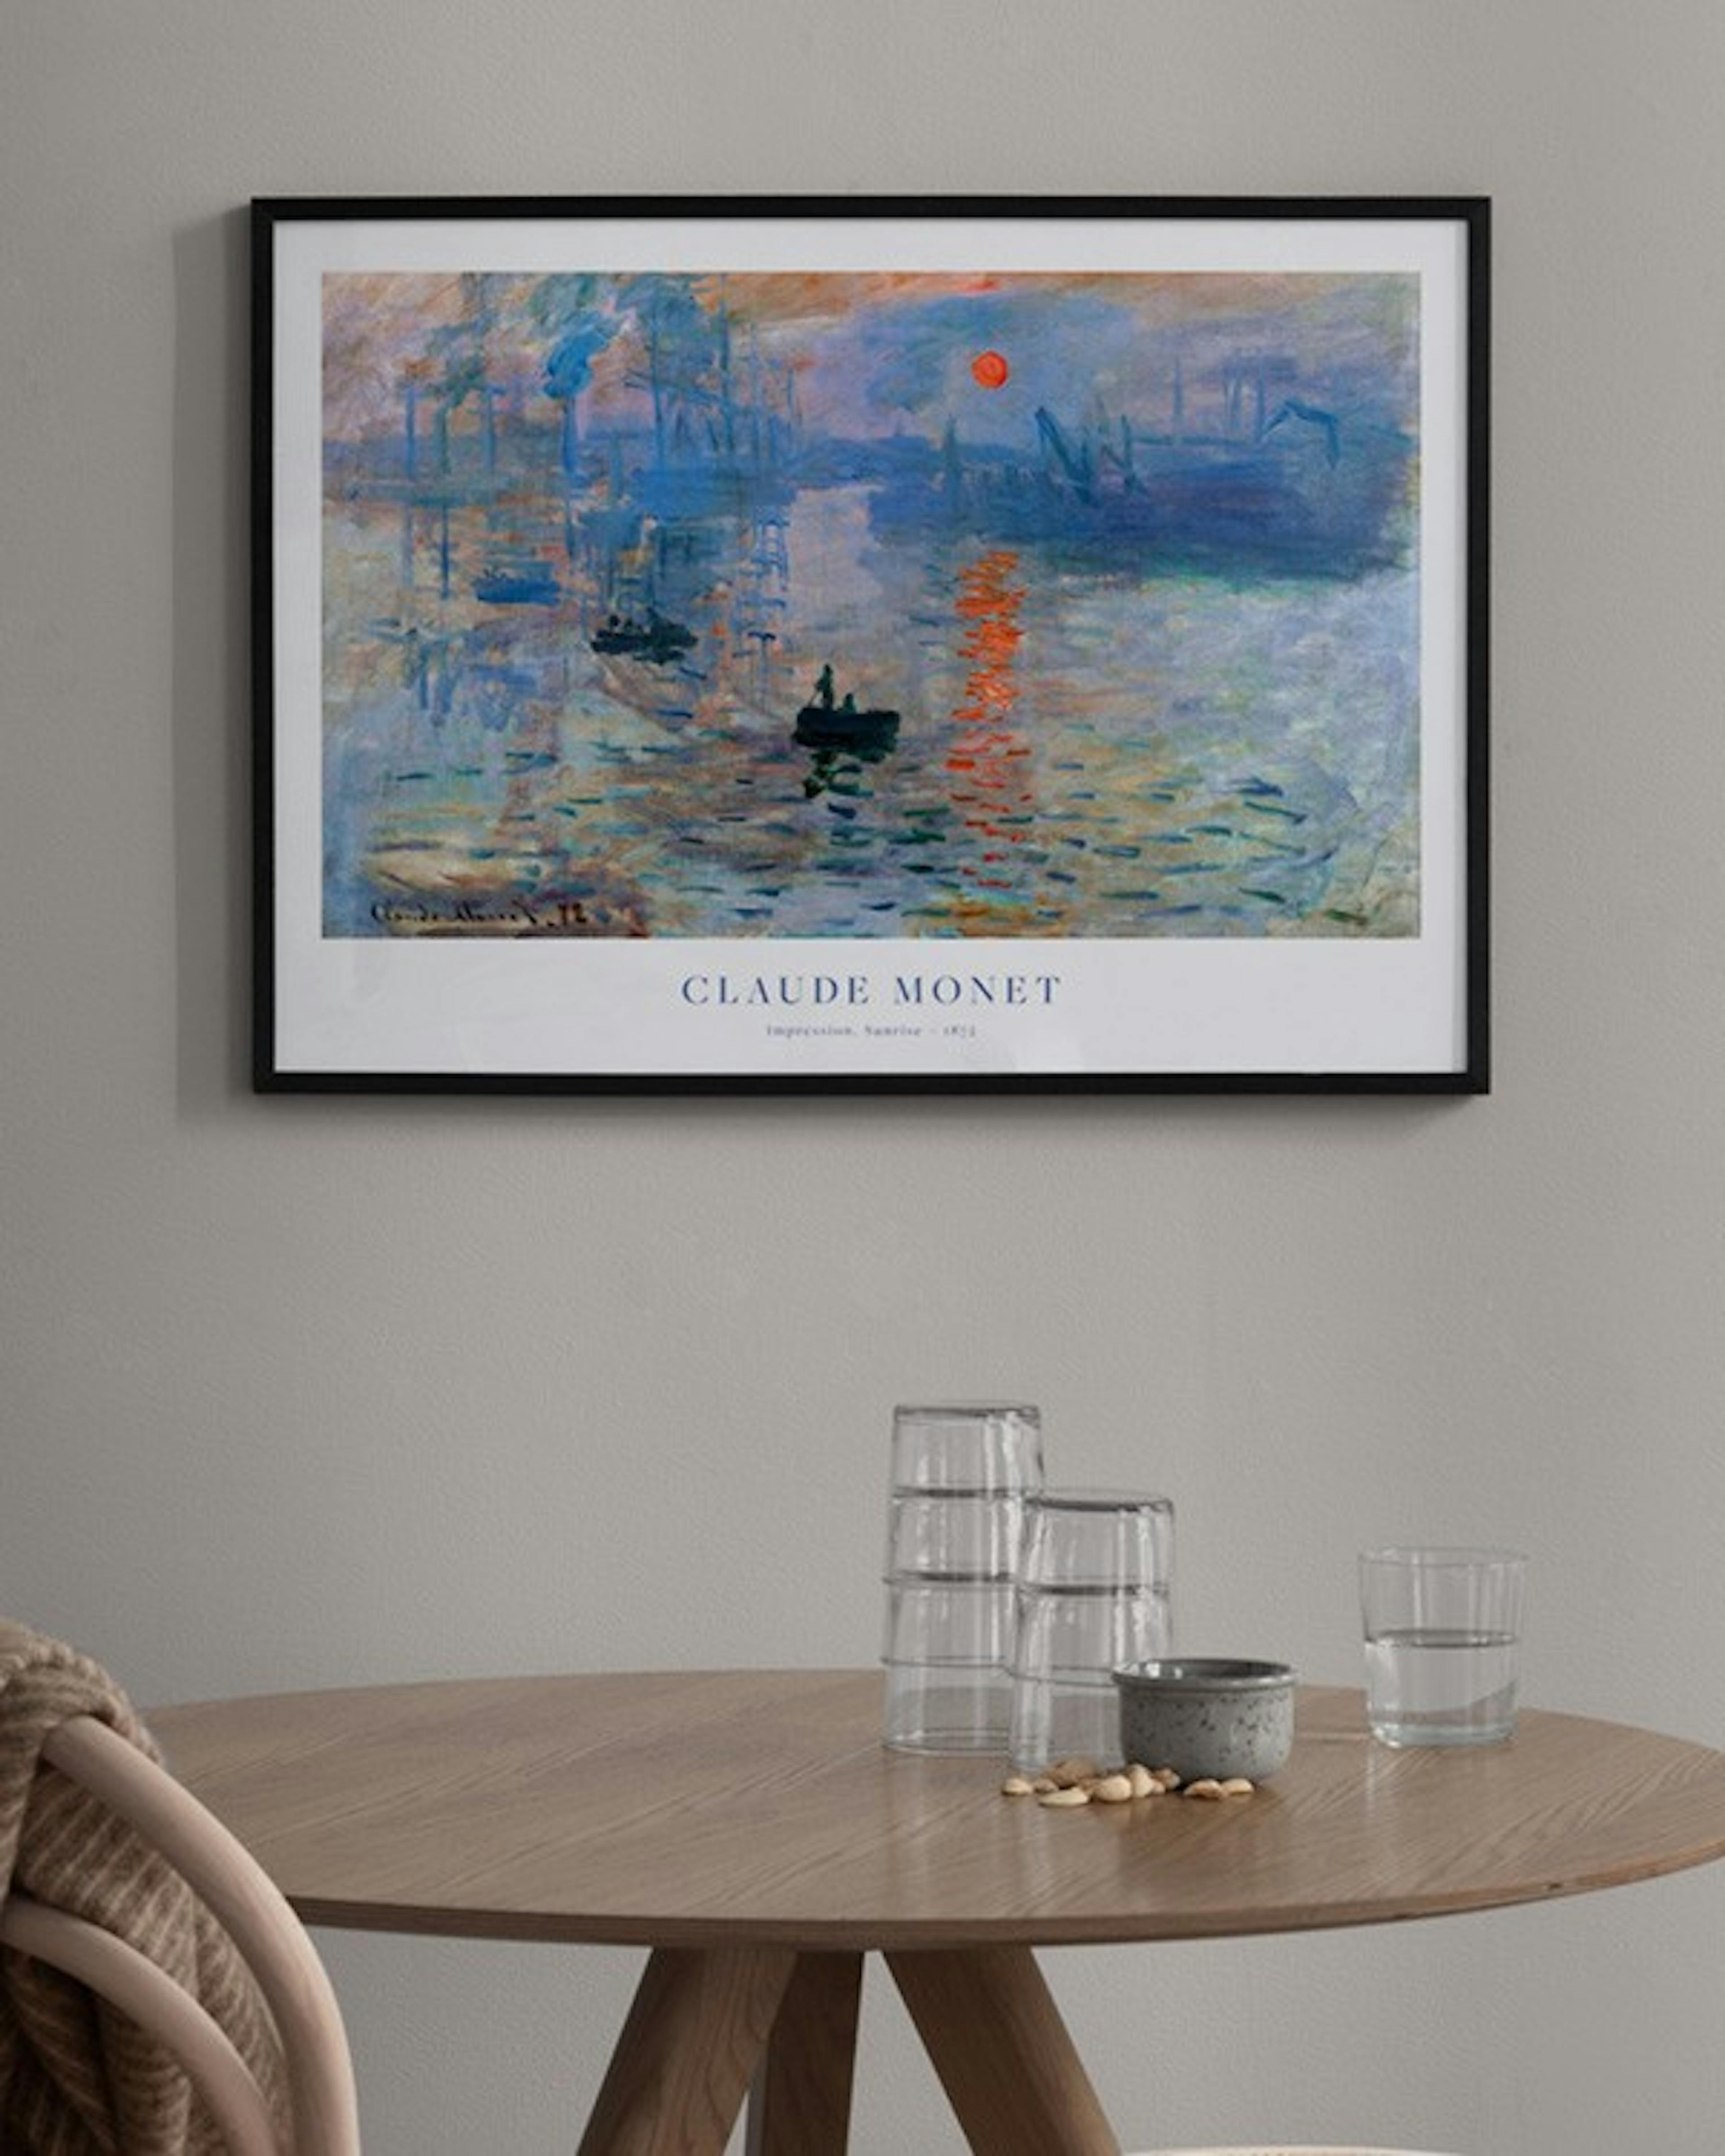 Monet - Impression, Sunrise Print